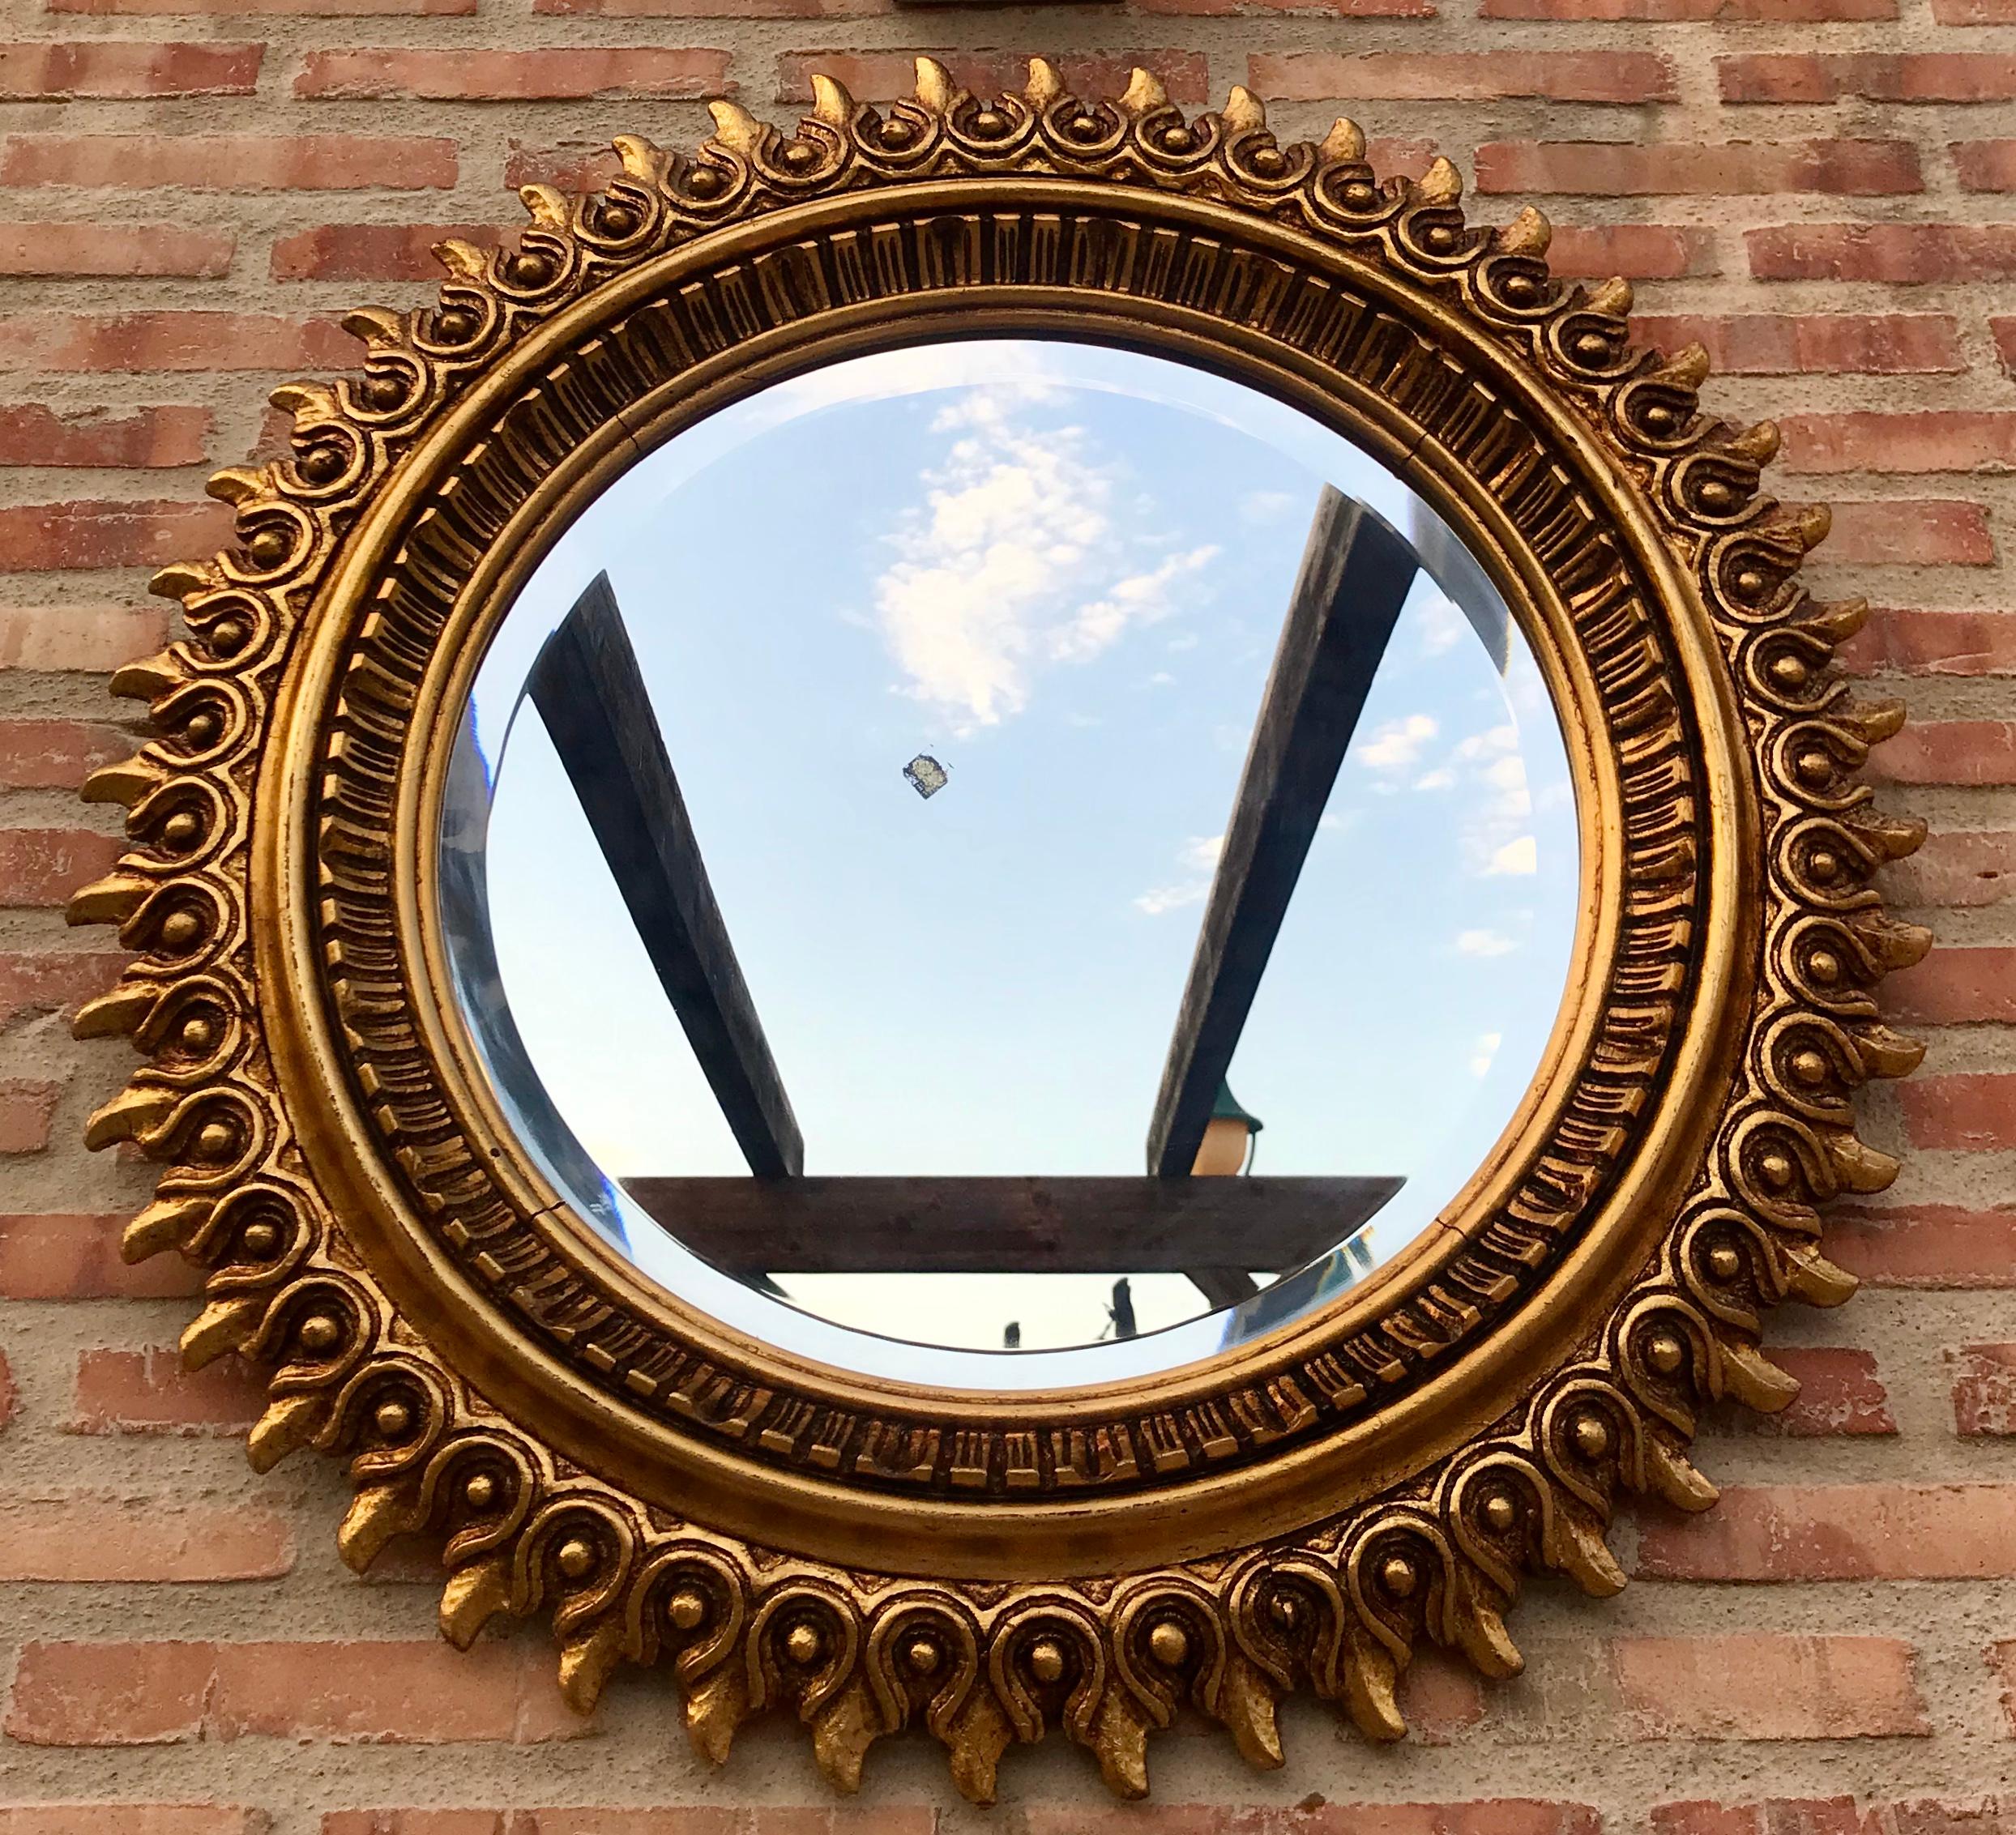 A gorgeous starburst sunburst leafed frame mirror. Made of giltwood


Interior mirror measurements: Diameter 18.89 in.